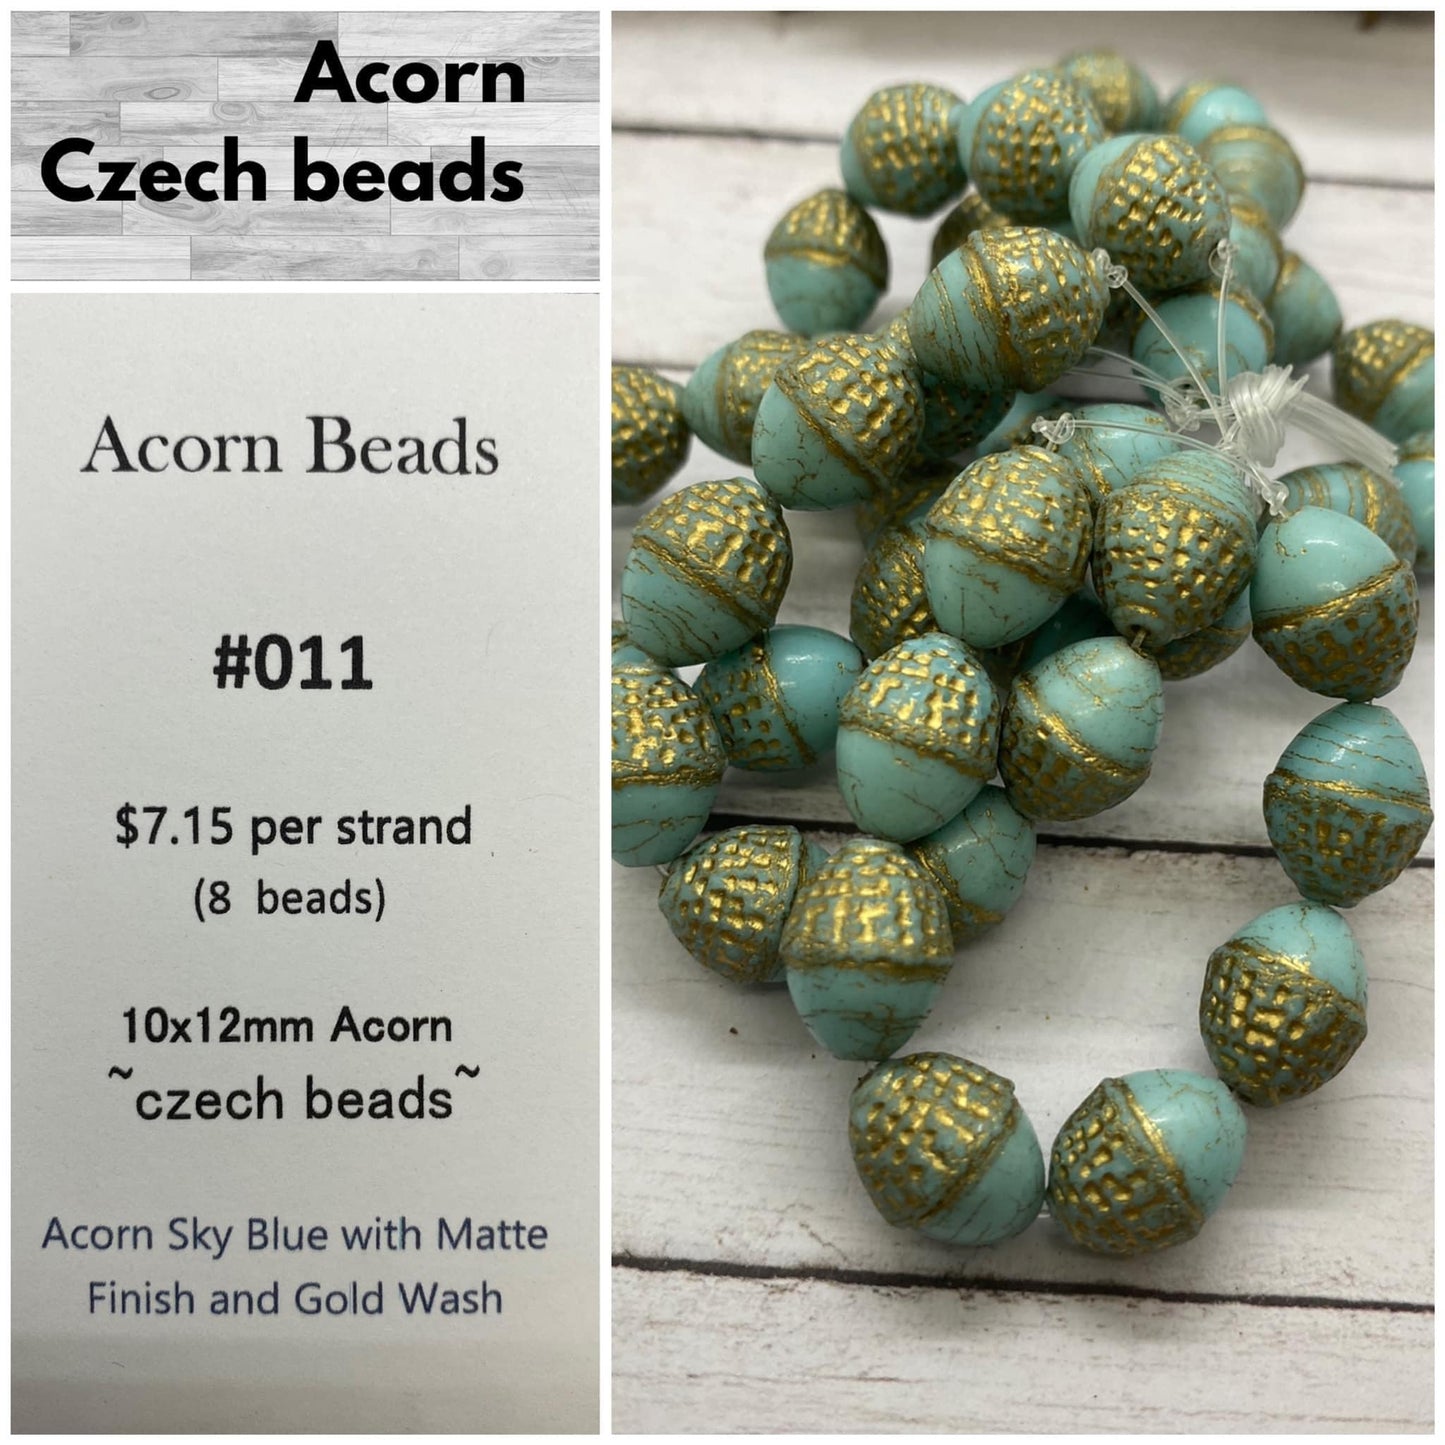 Acorn Beads 10x12mm #011